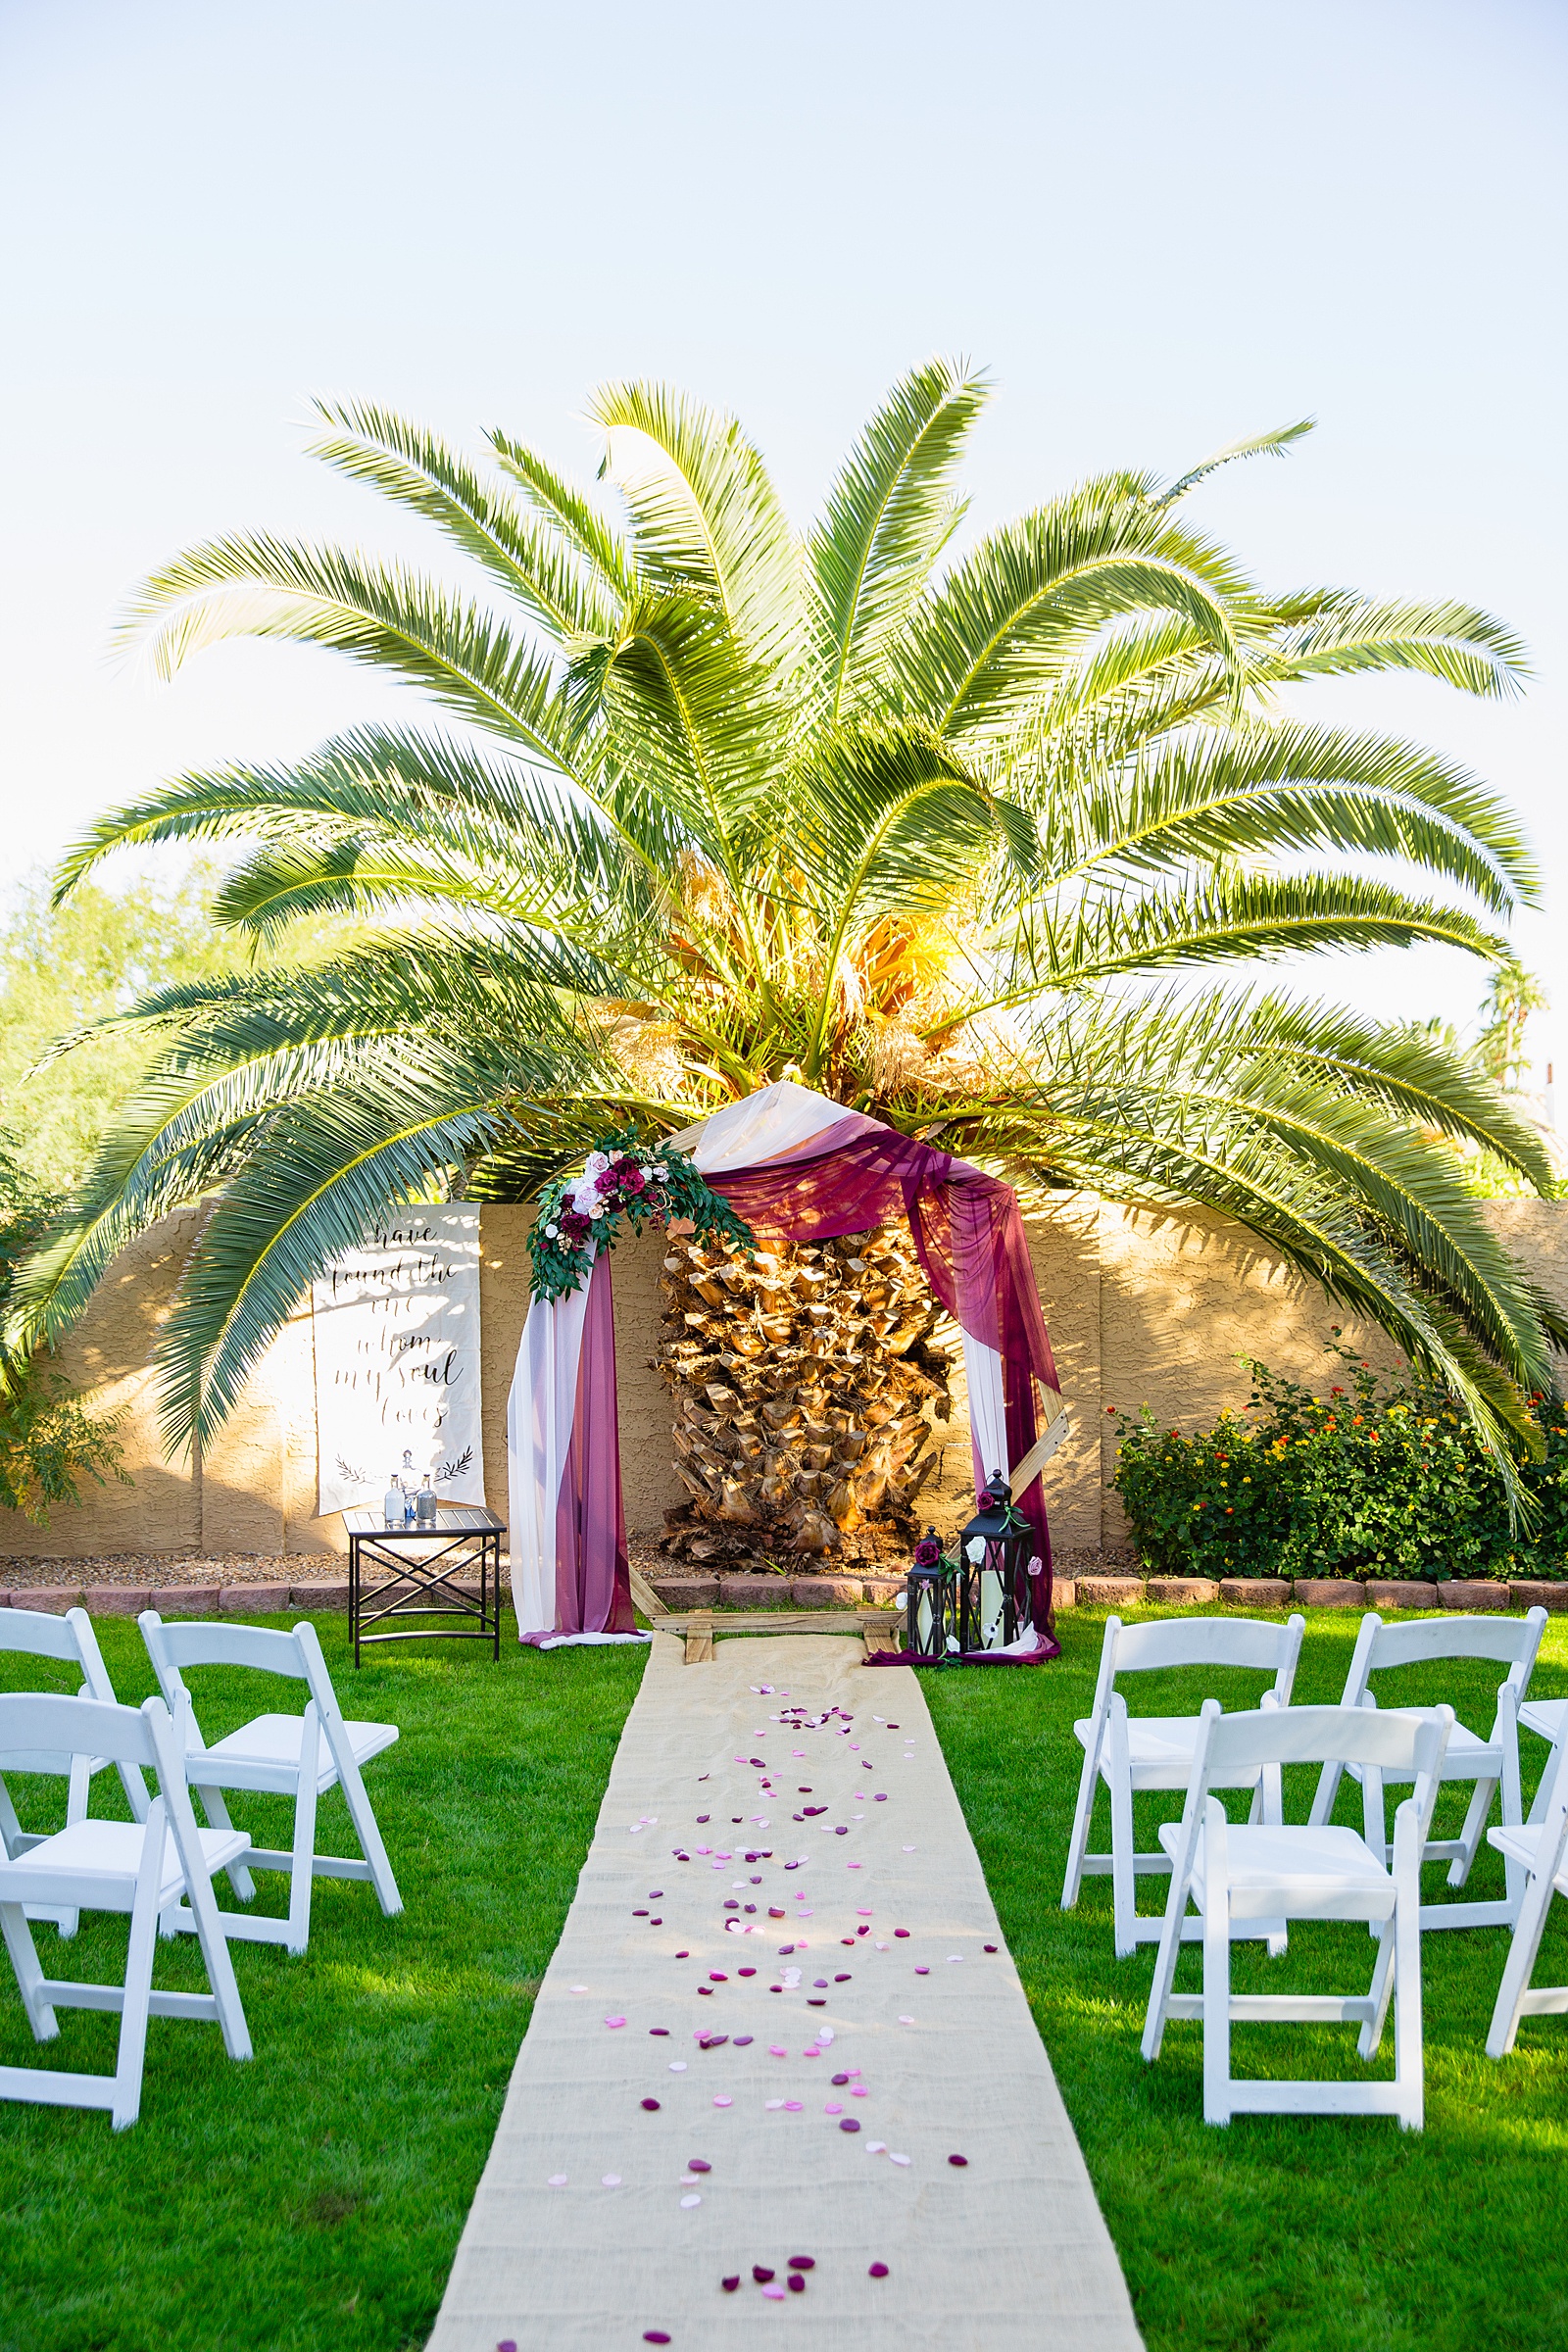 Wedding ceremony at Backyard Micro by Phoenix wedding photographer PMA Photography.